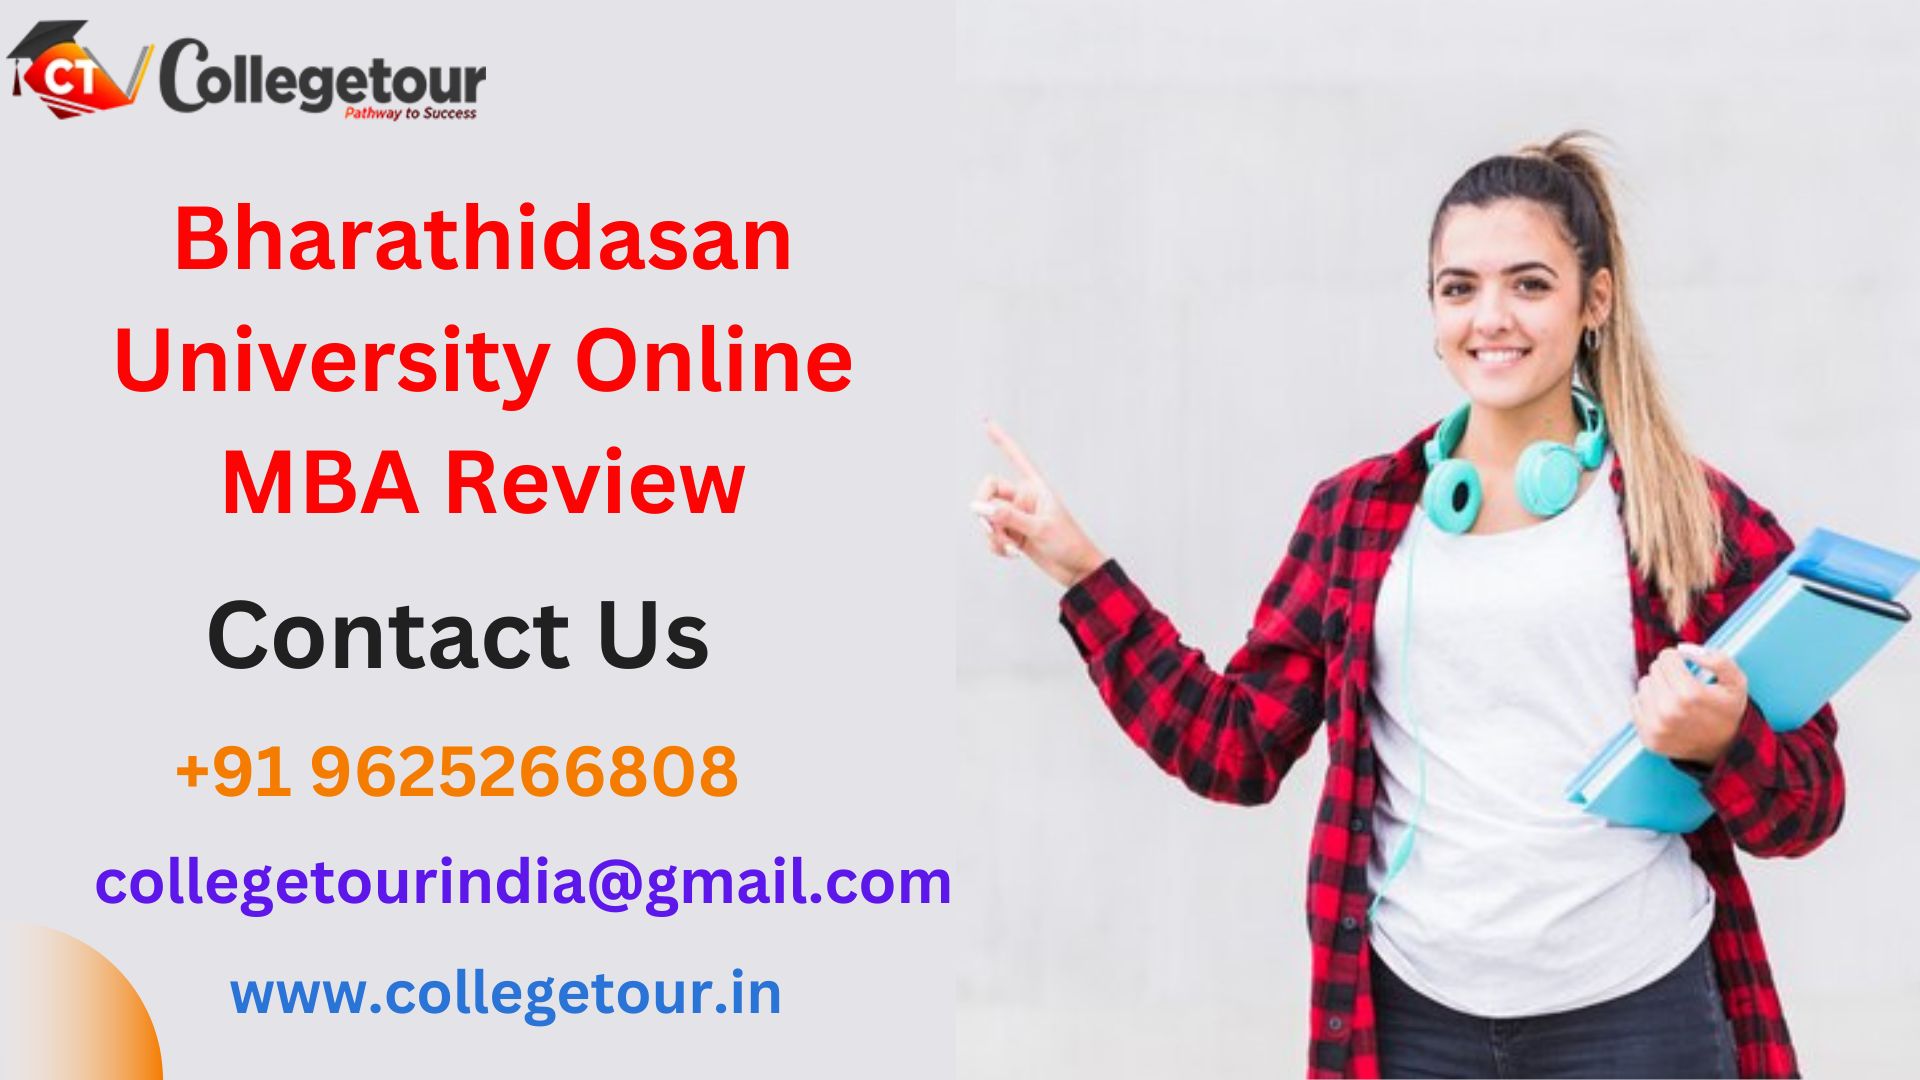 Bharathidasan University Online MBA Review